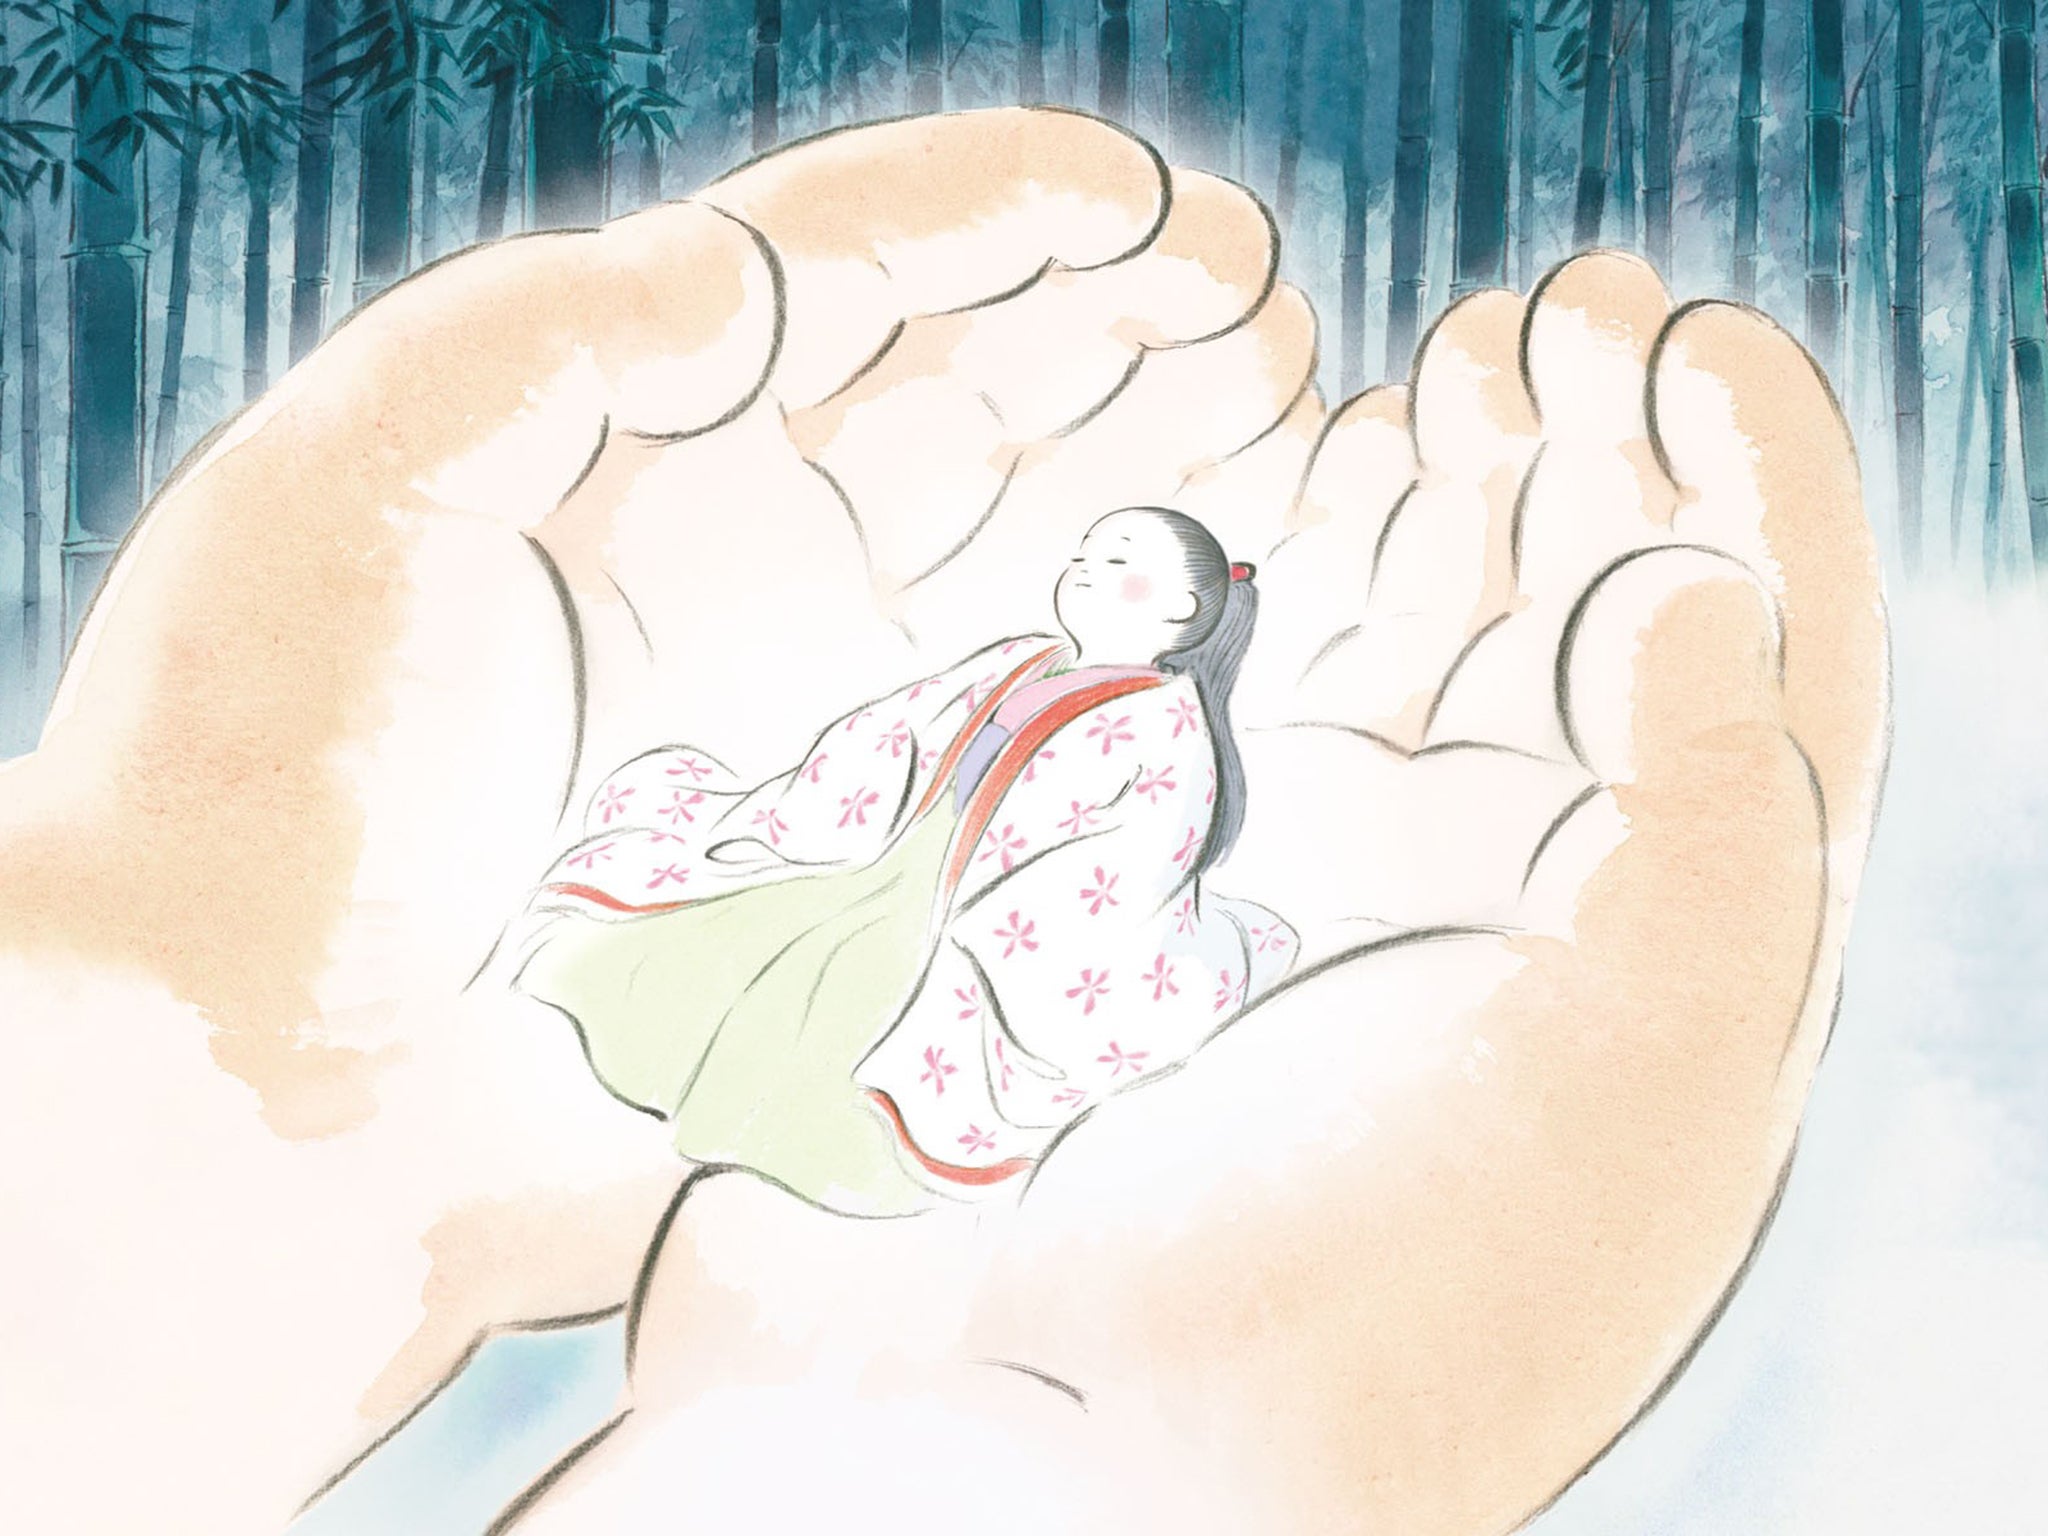 Hand-crafted wonder: Studio Ghibli’s delicate beauty ‘The Tale of the Princess Kaguya’